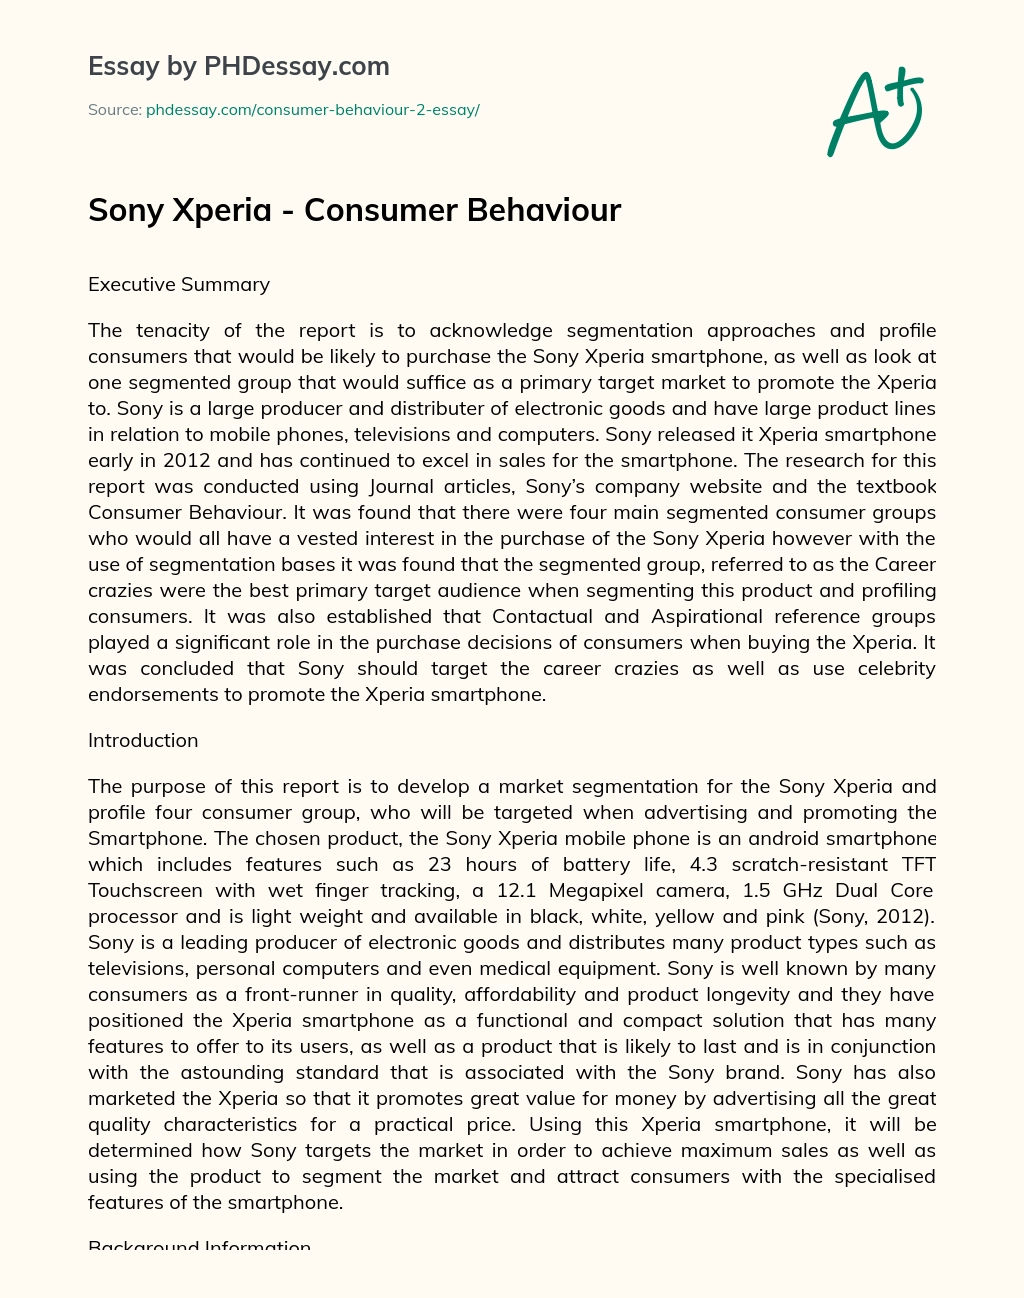 Sony Xperia – Consumer Behaviour essay